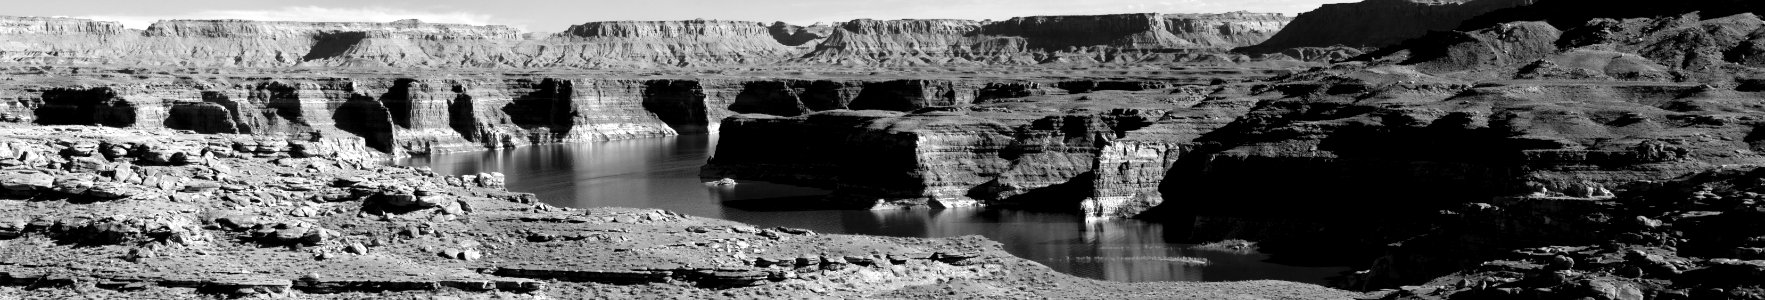 Grayscale Photo Of Canyon photo